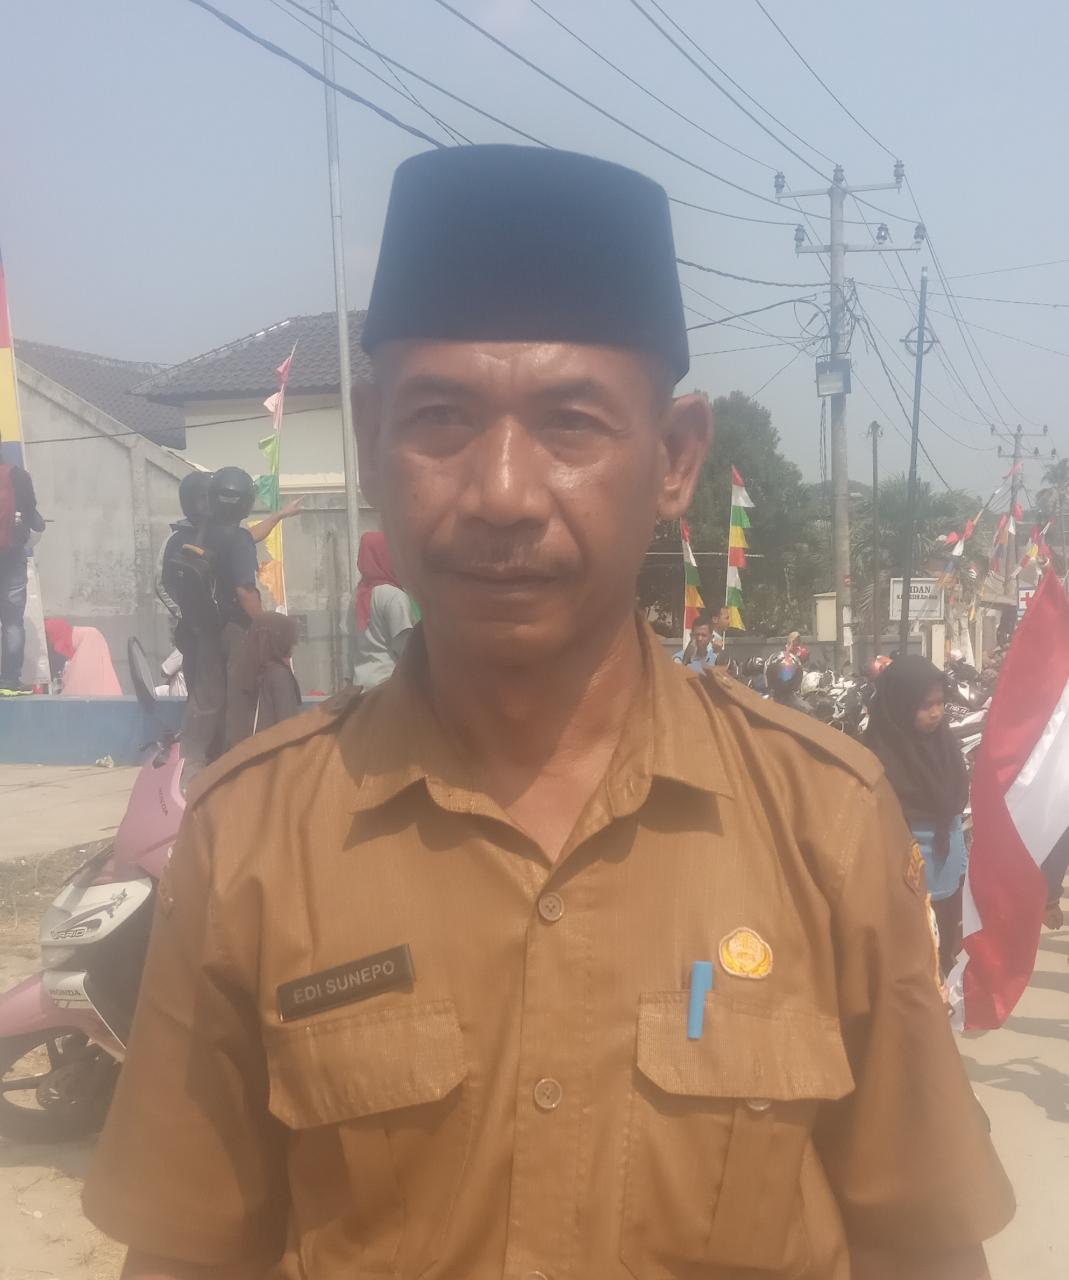 Foto : Edi Sunepo,Ketua Panitia Perayaan Hari Besar National Kecamatan Banjarsari,Kabupaten Lebak